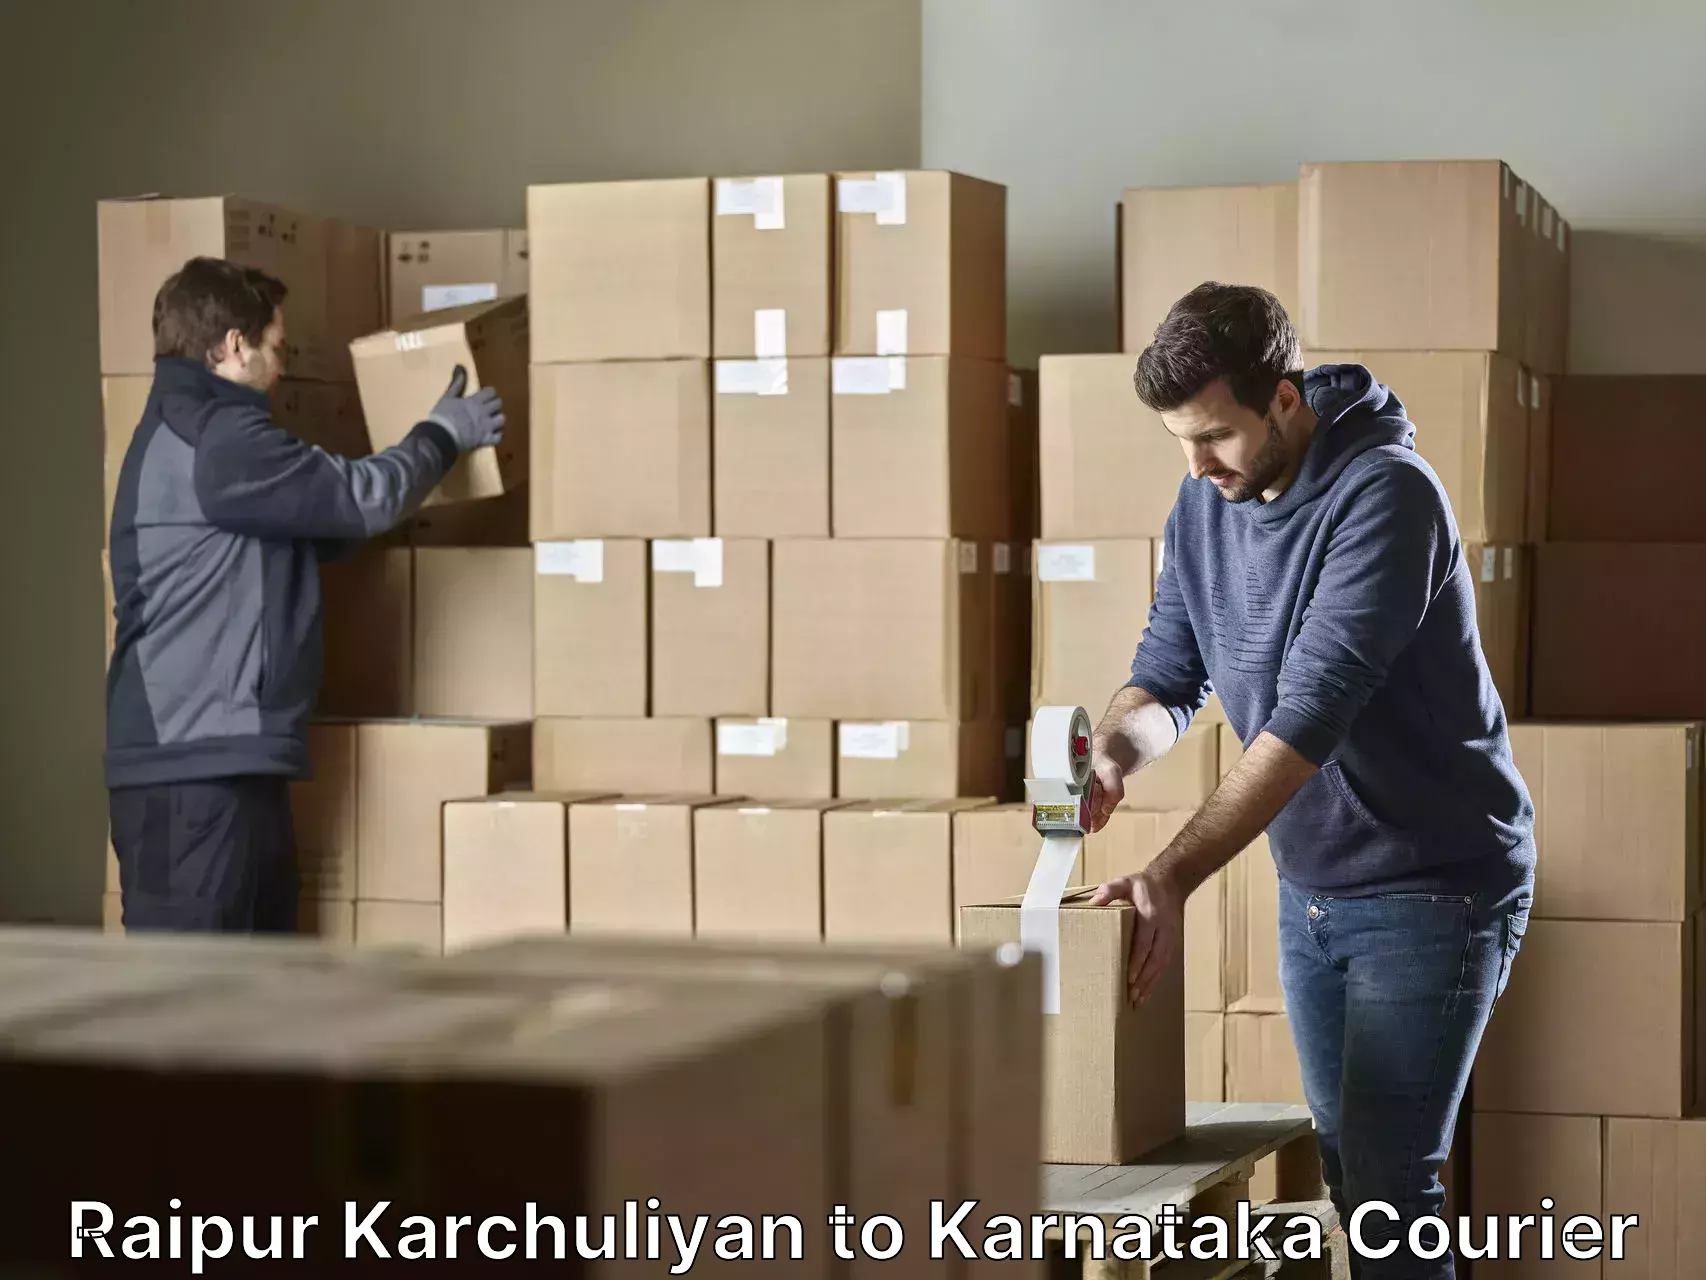 Furniture moving specialists Raipur Karchuliyan to Belgaum